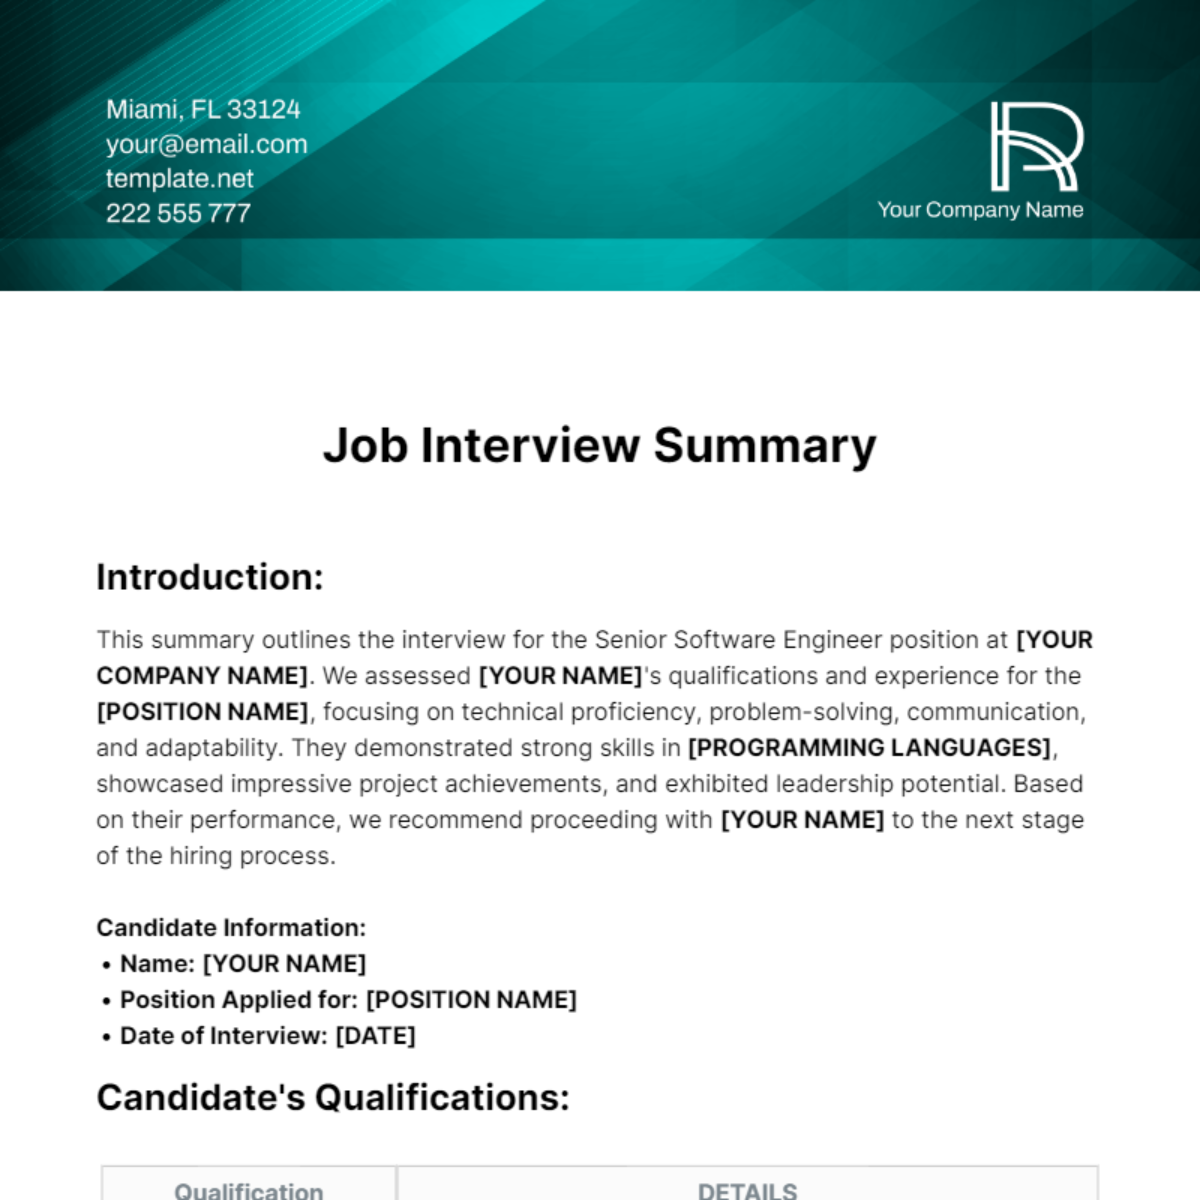 Job Interview Summary Template